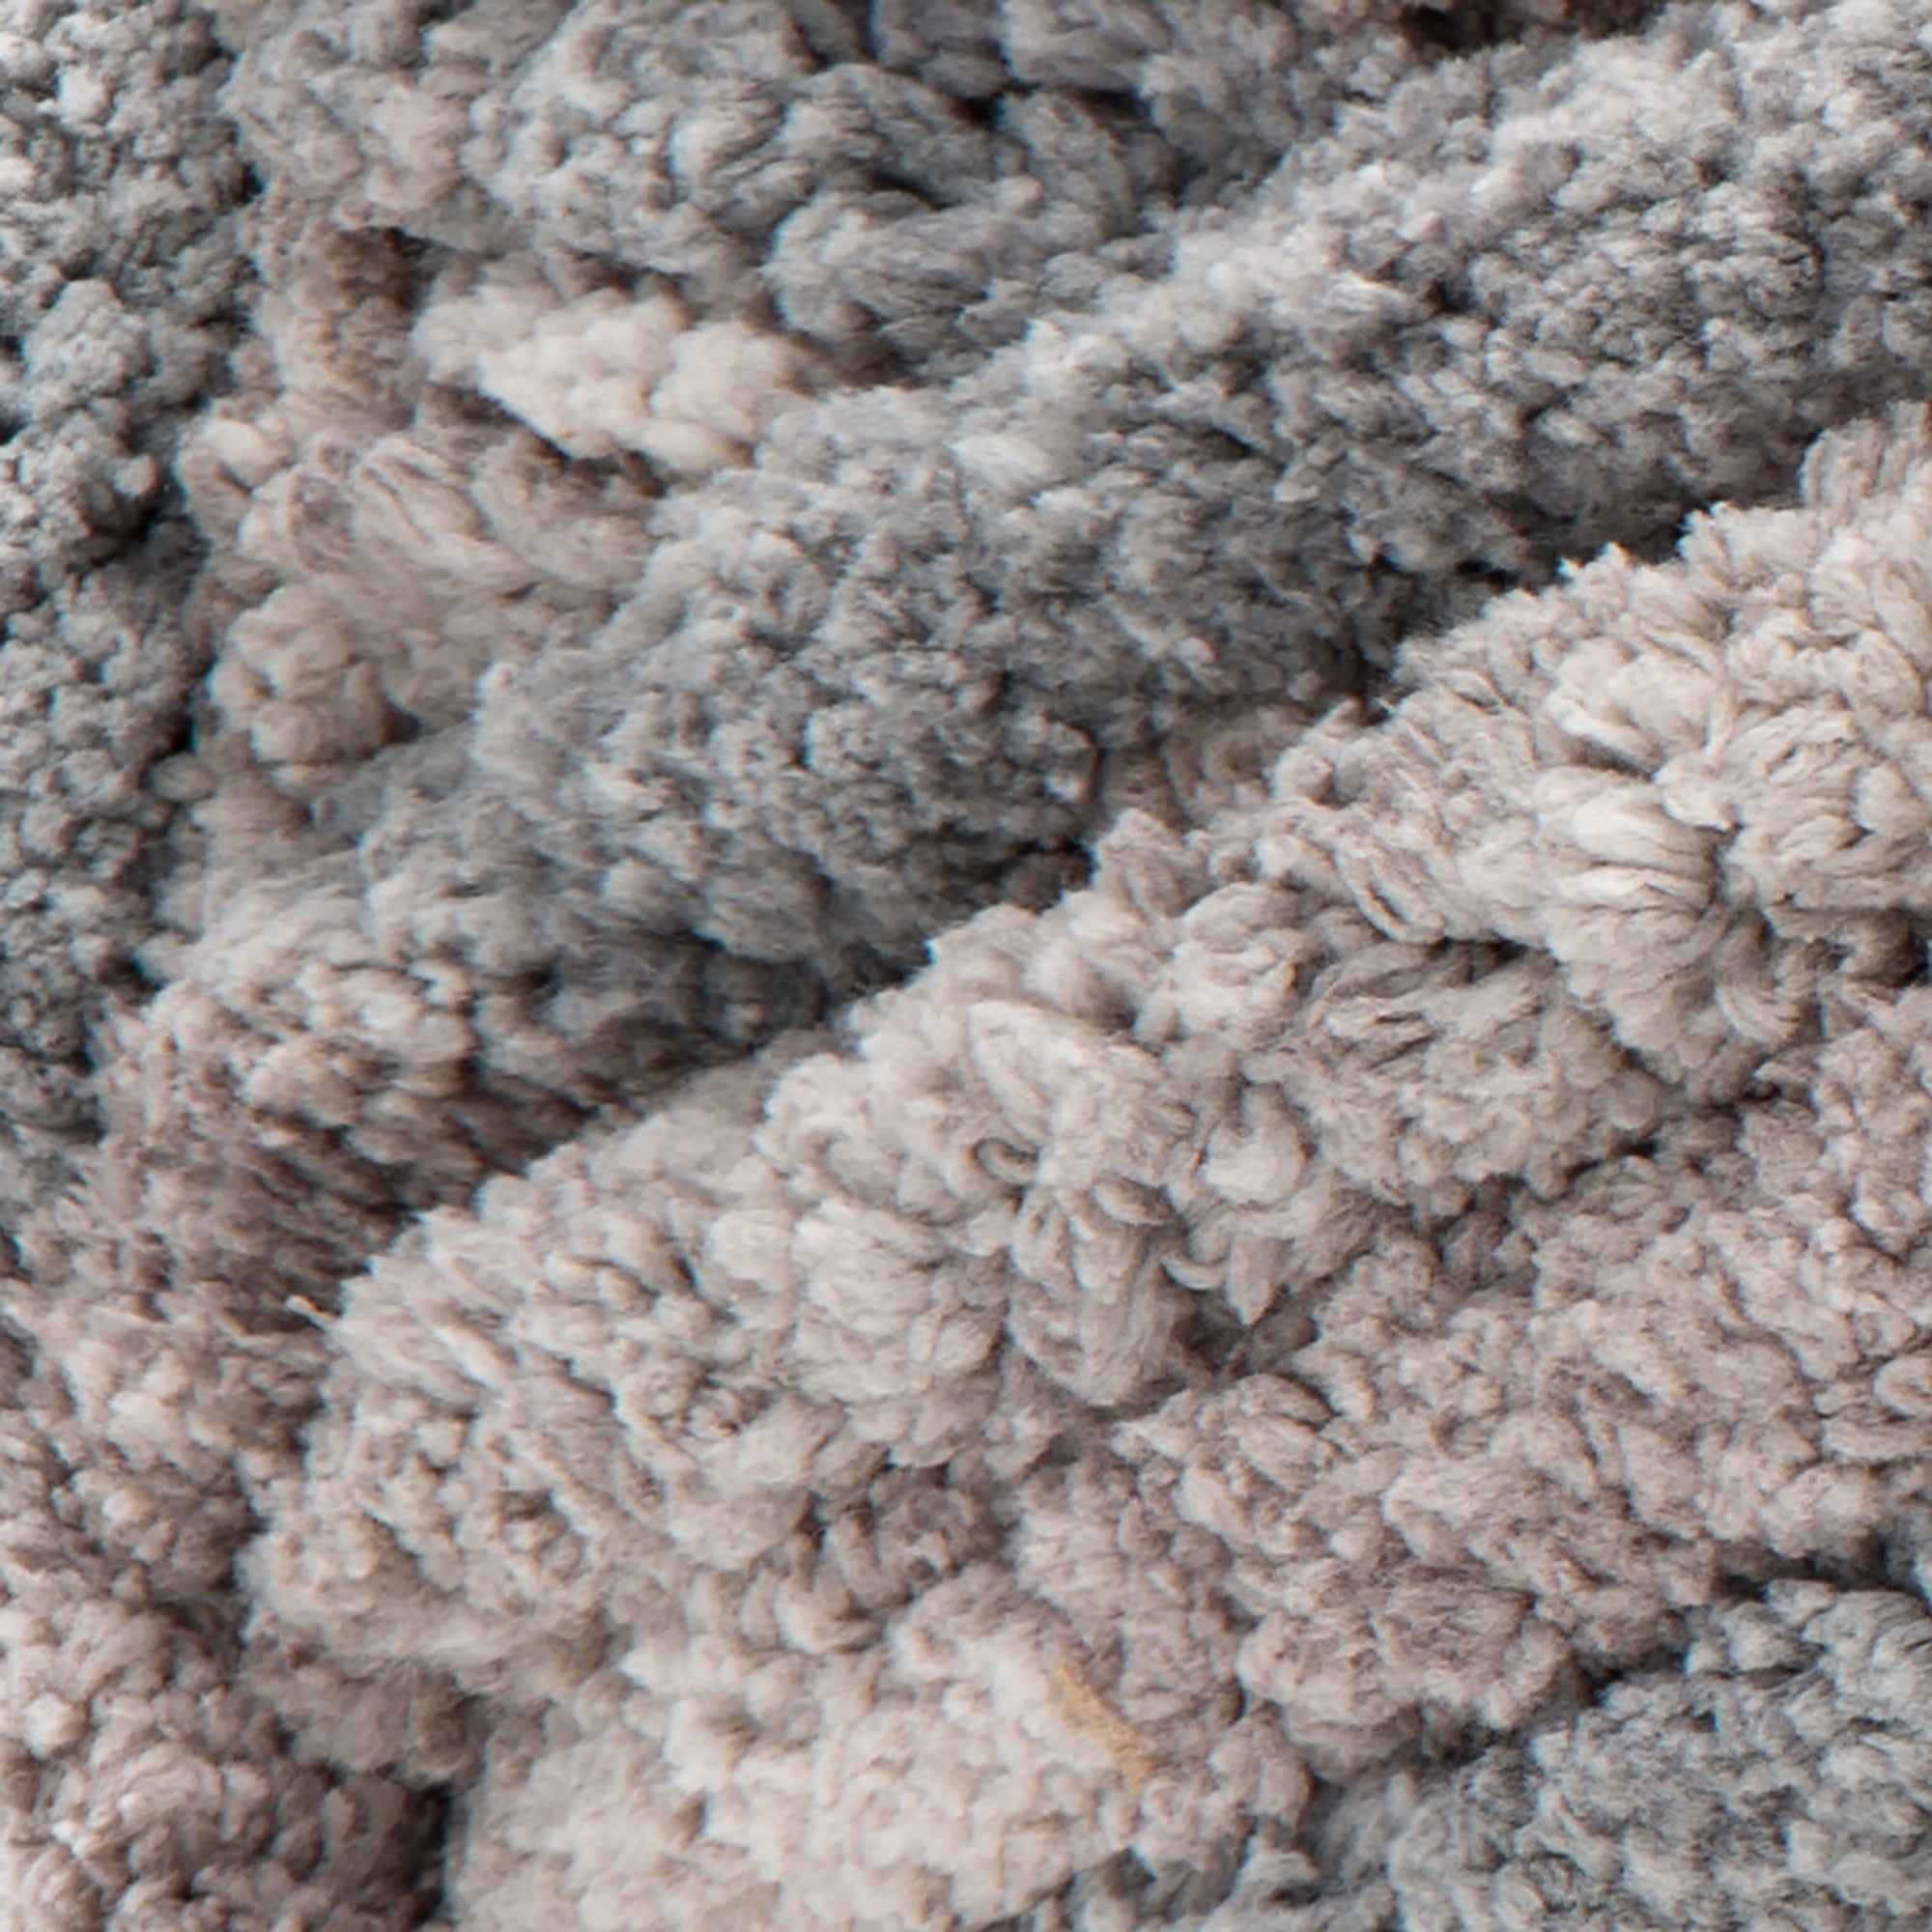 Bernat® Blanket Extra Thick™ #7 Jumbo Polyester Yarn, Purple Malva